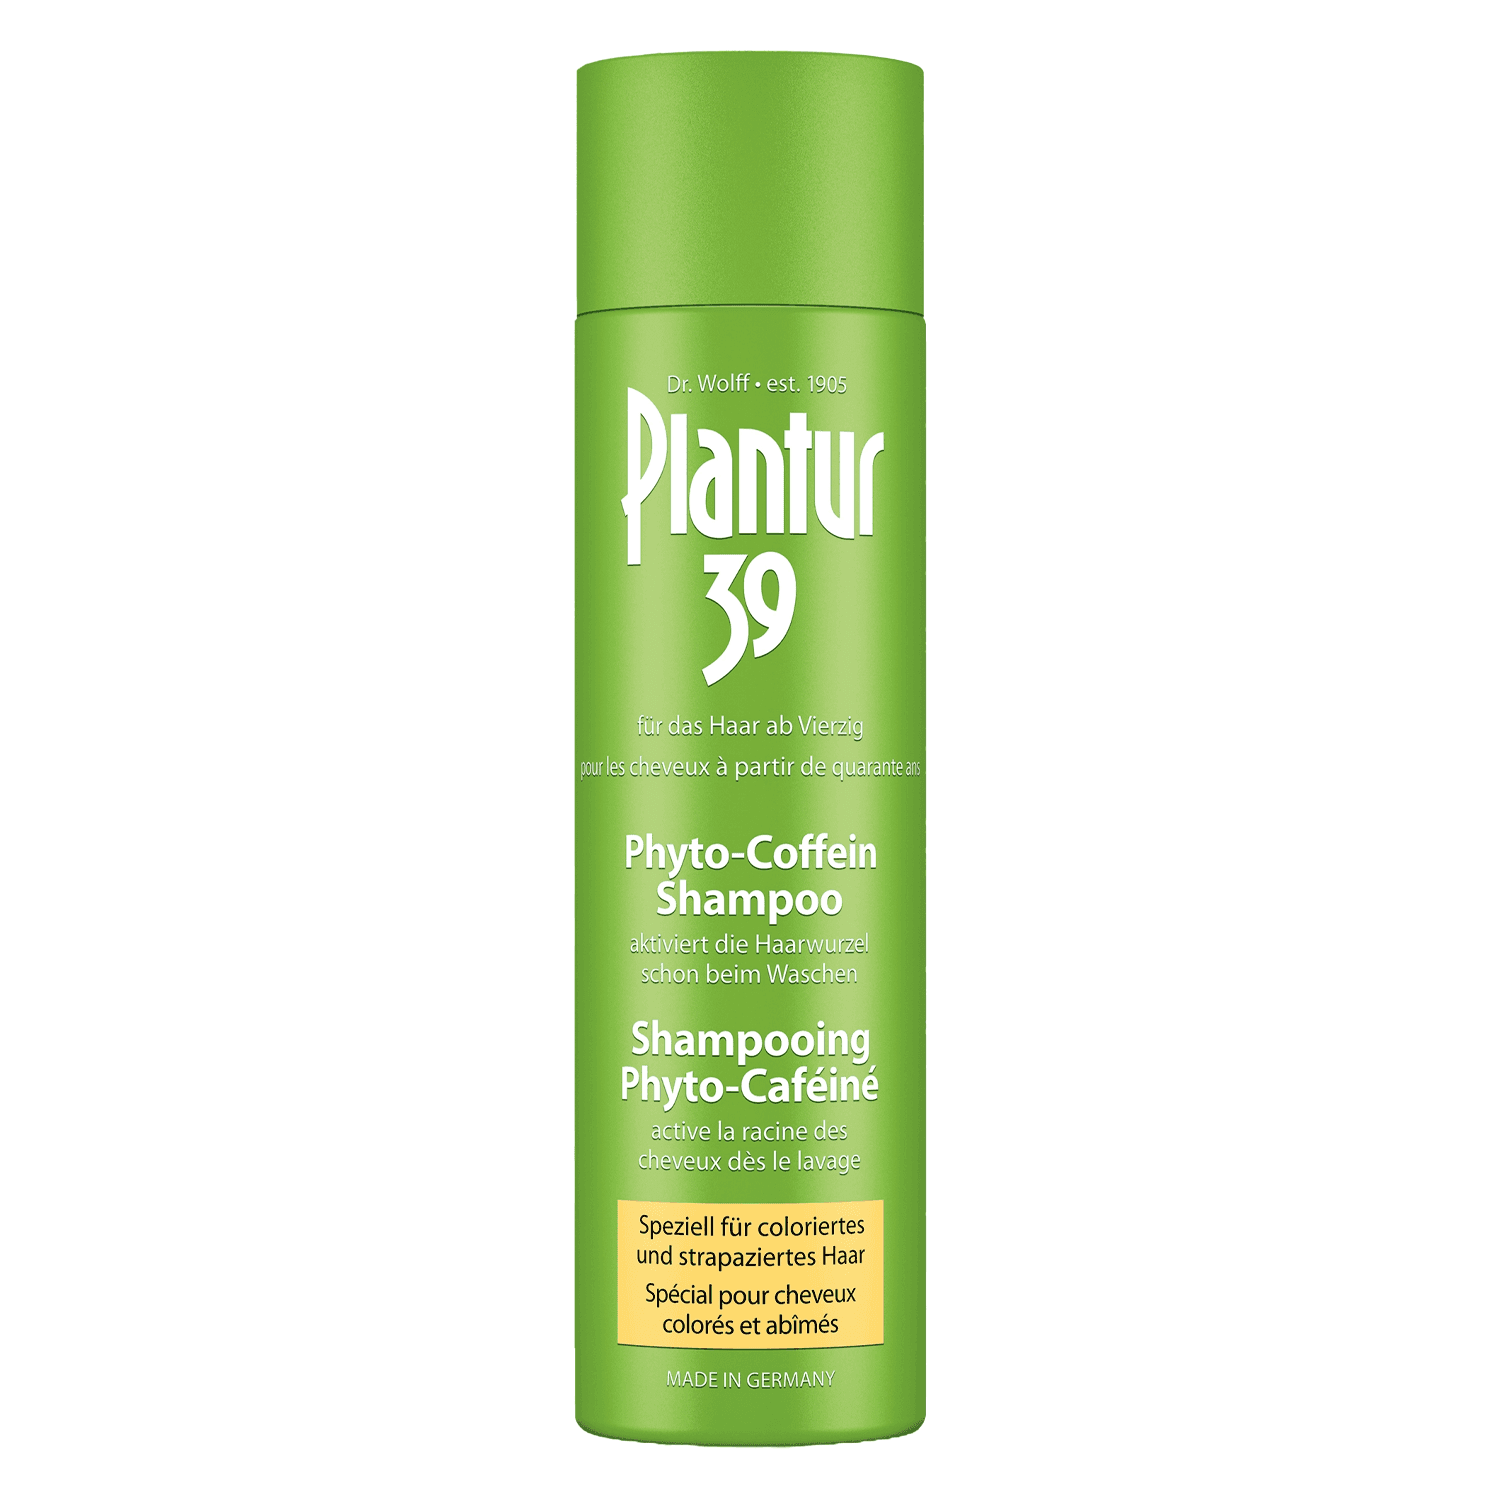 Plantur 39 - Phyto-Caffeine Shampoo For coloured and stressed hair